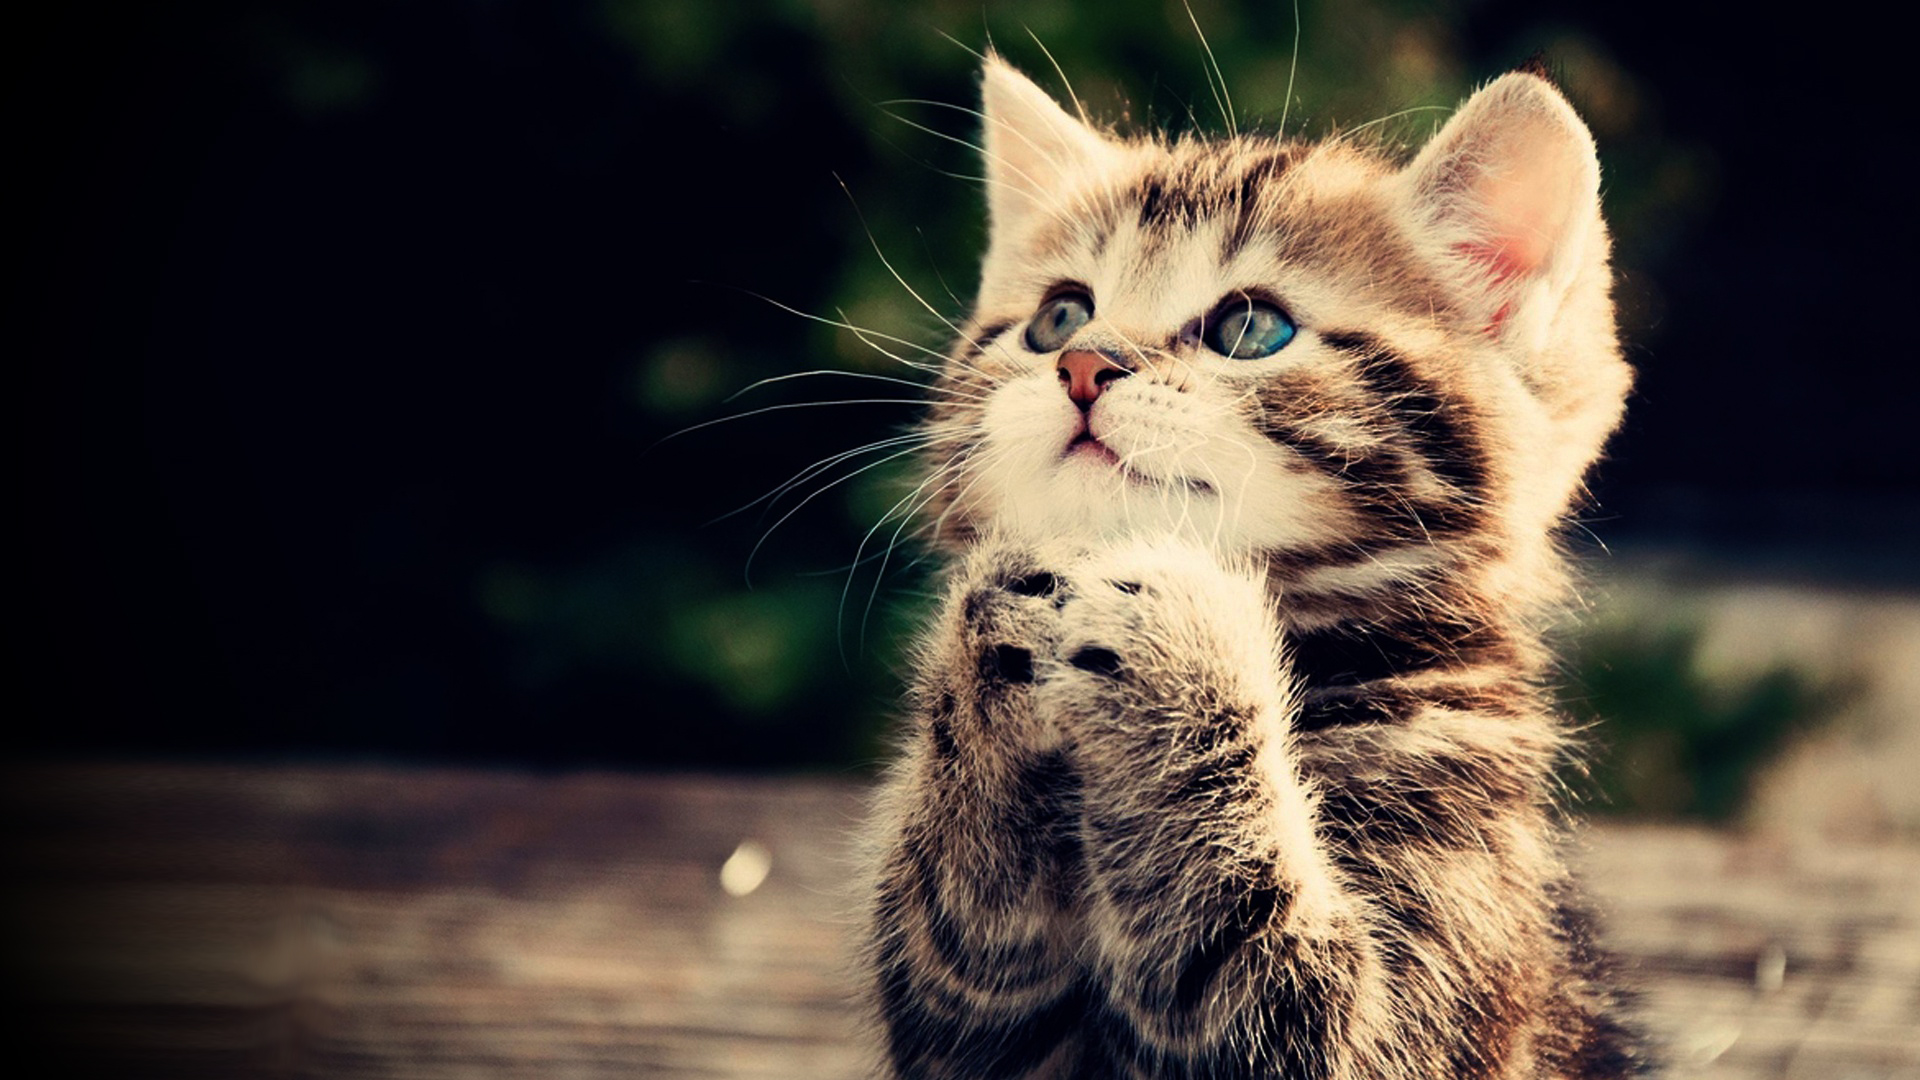 Funny Cat Full HD Wallpaper Praying Kitten Cute Animal Picture